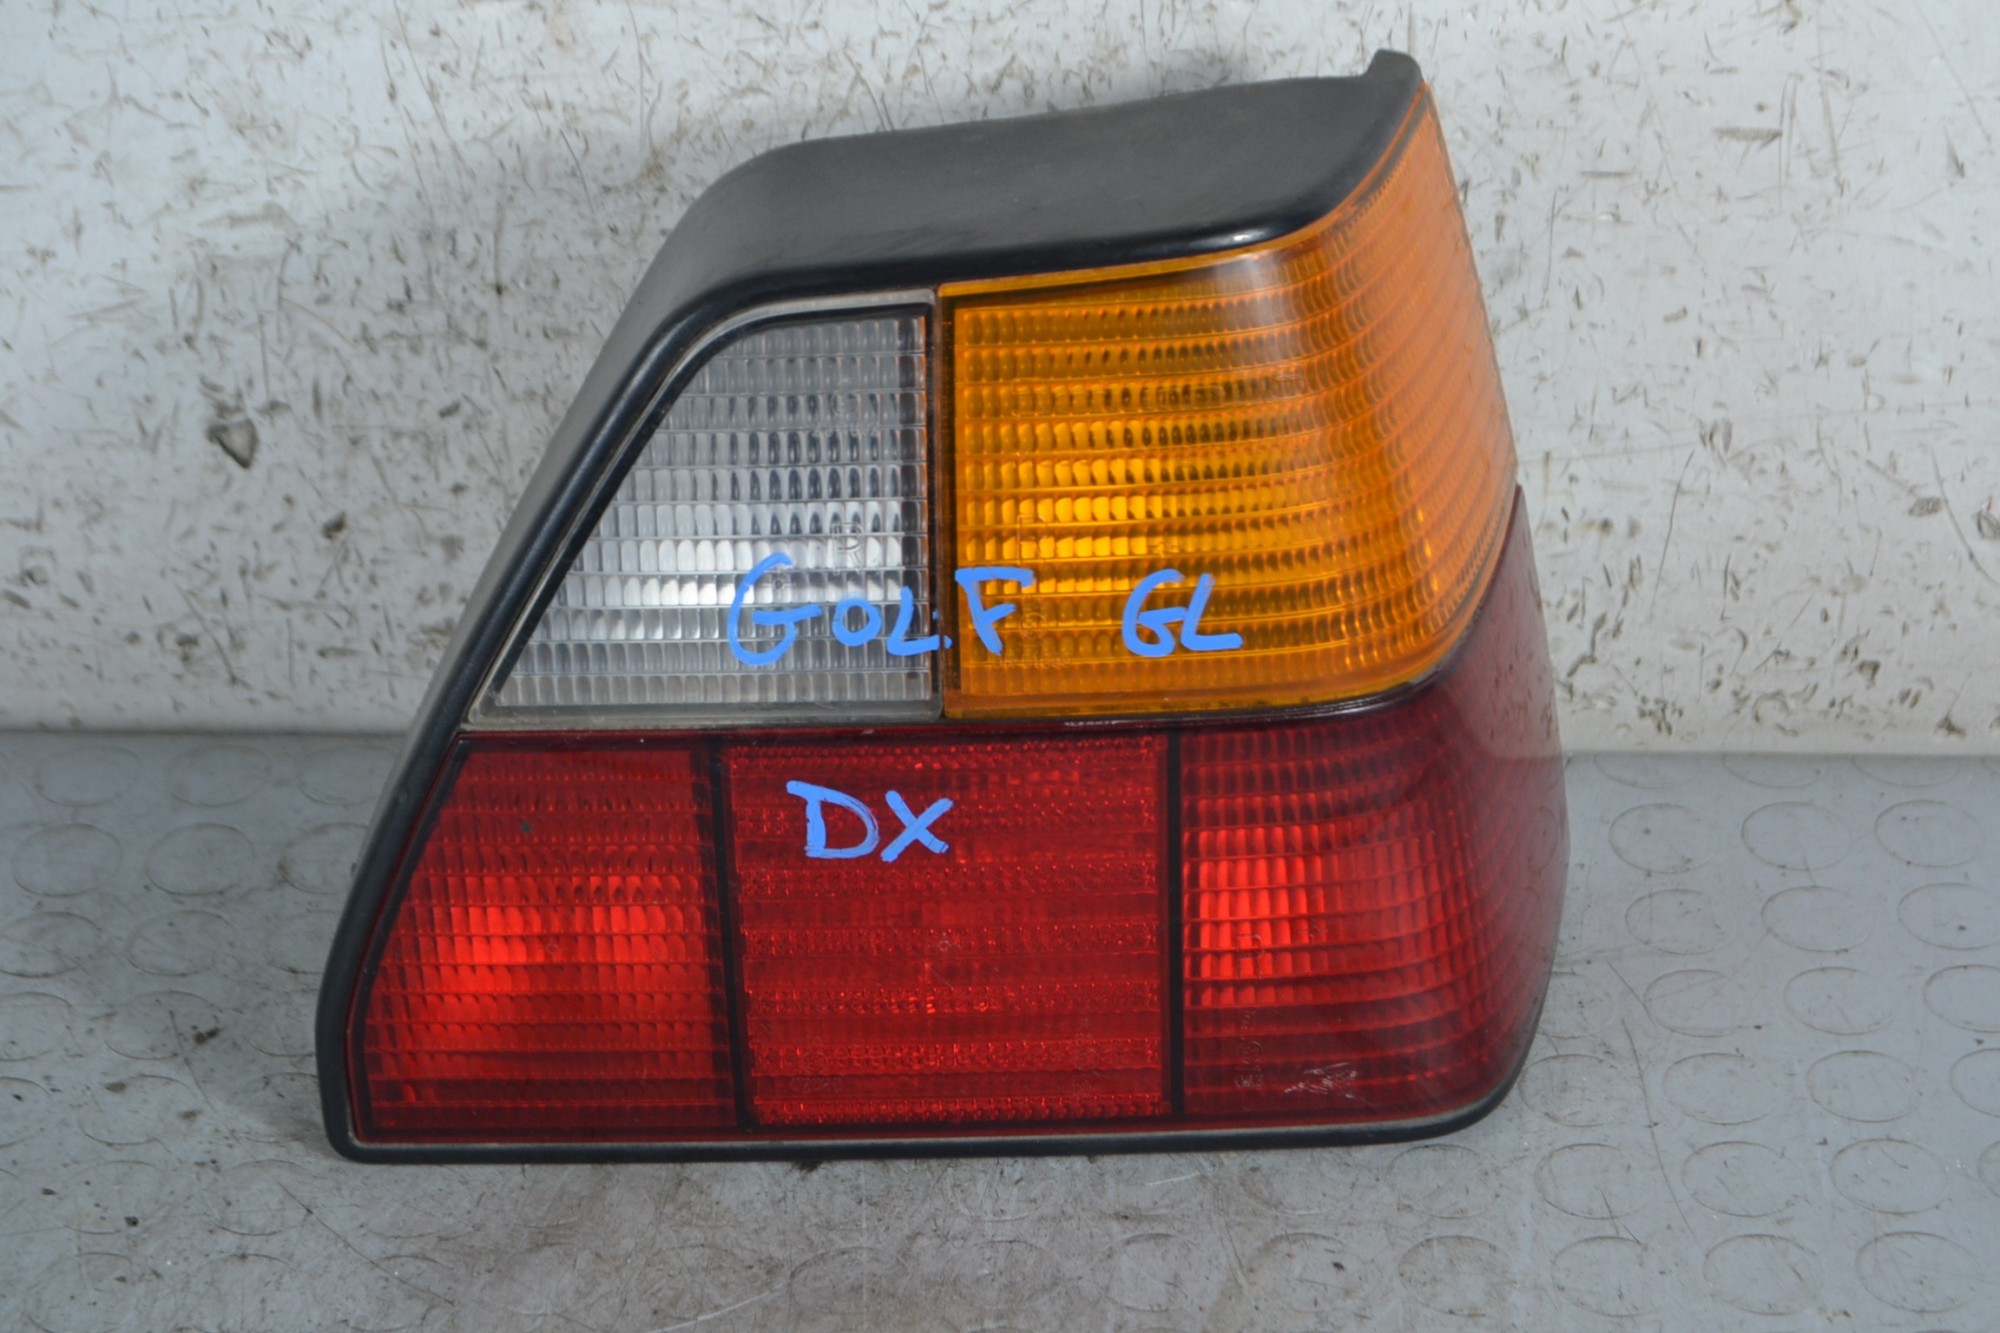 Fanale Stop posteriore DX Vokswagen Golf II GL dal 1987 al 1992 Cod 191945258  1678465257803